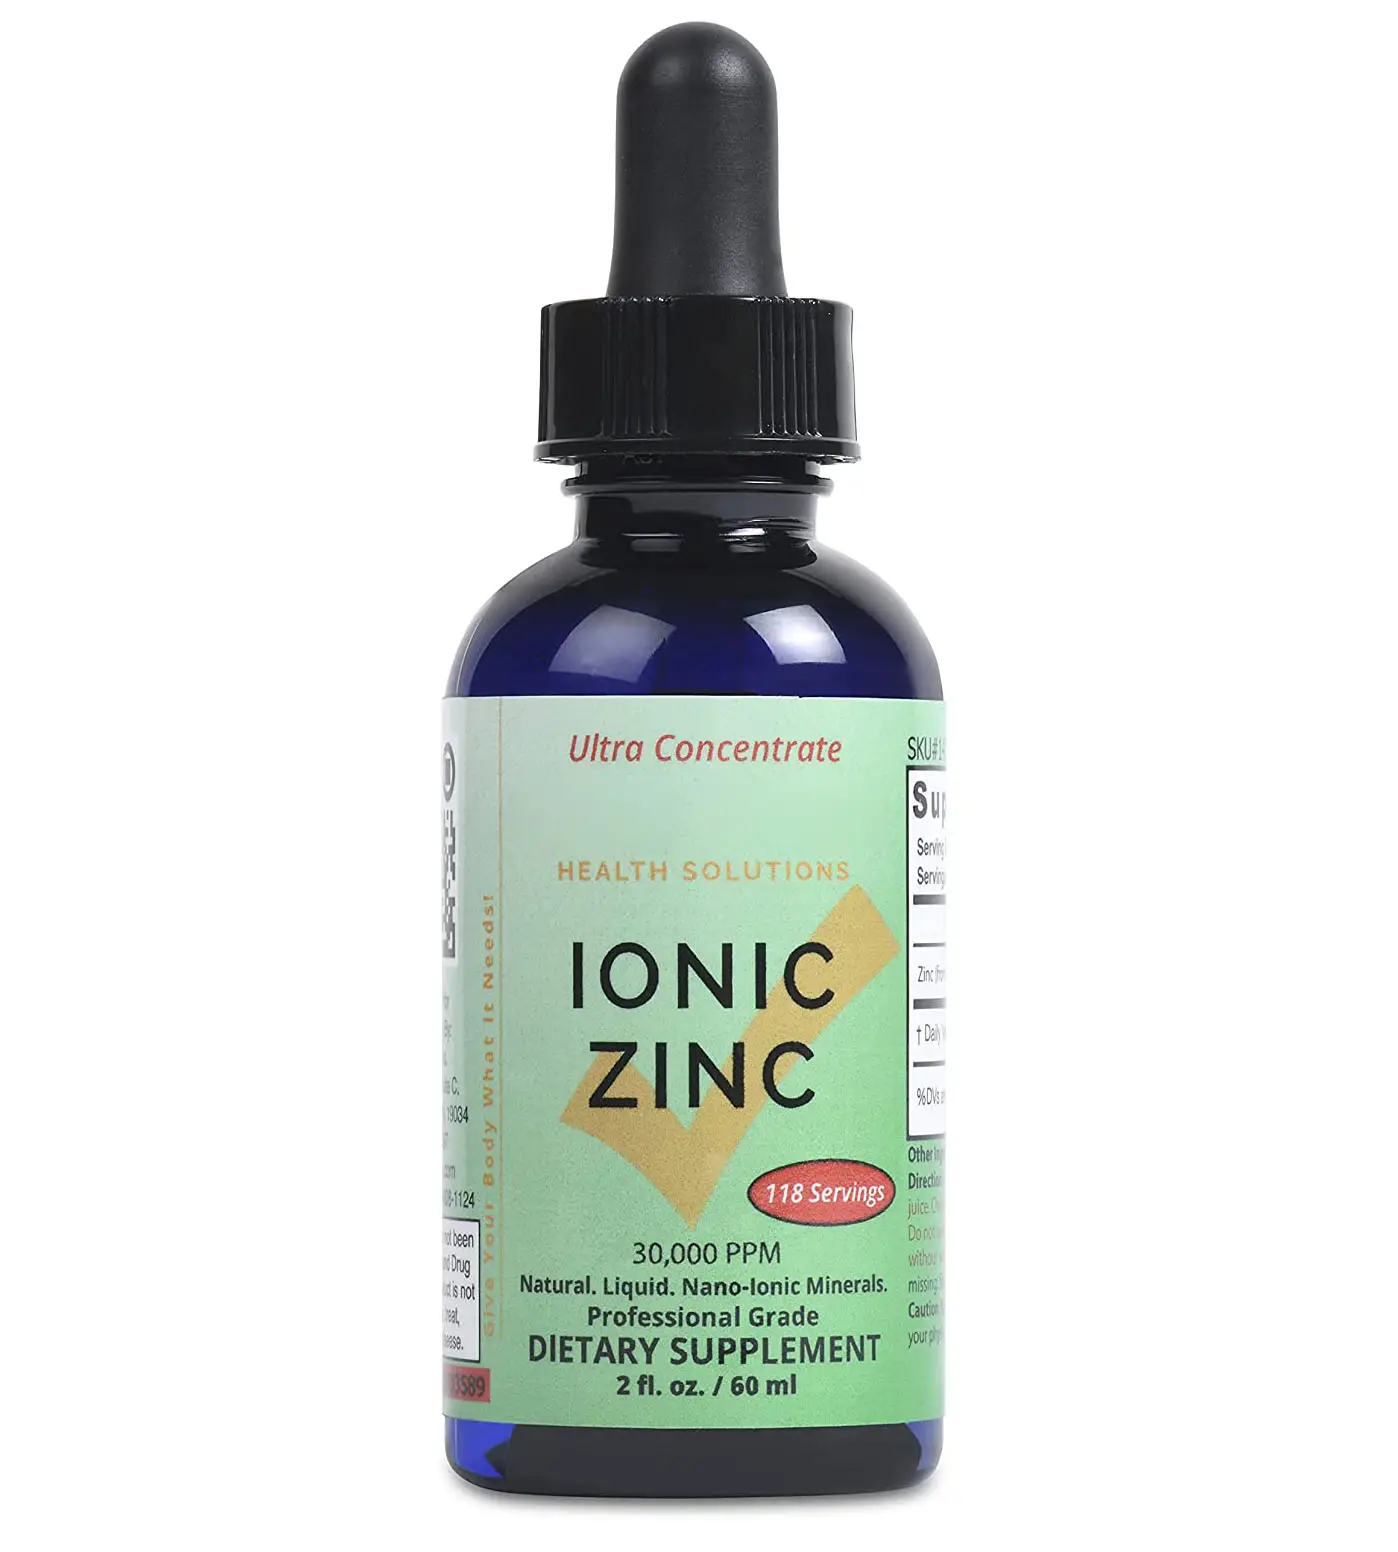 Bones Supplements Organic Vegan Oral Liquid Zinc Calcium Iron Vitamin D3 K2 Drops for Immune Support